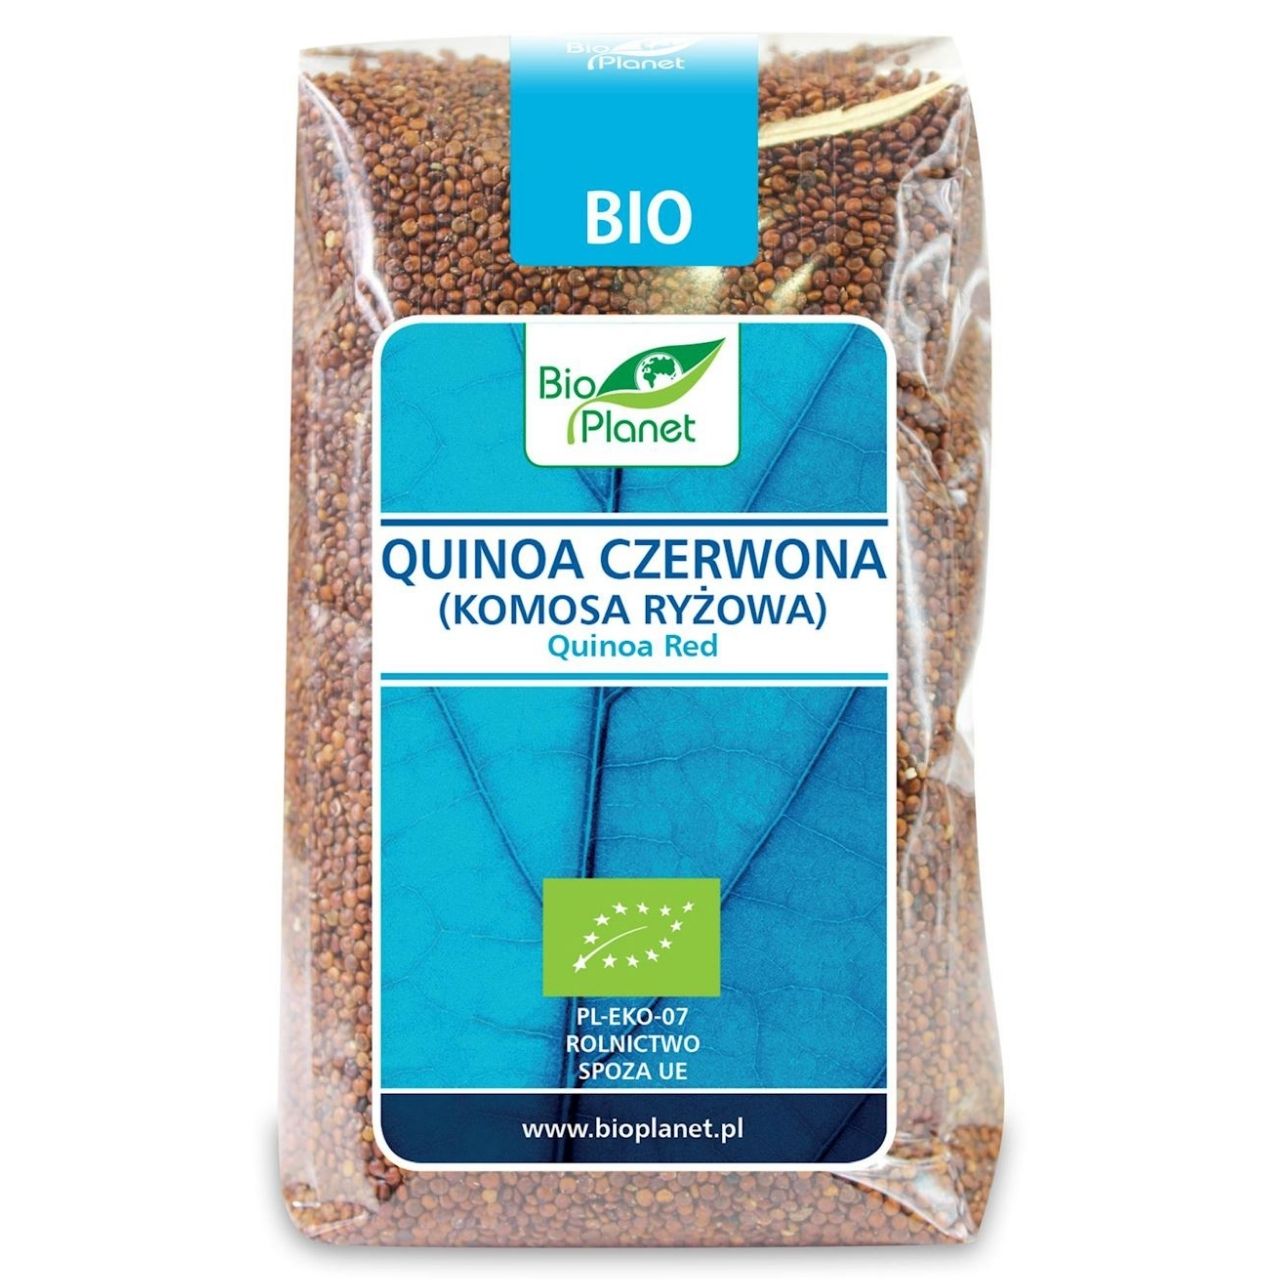 Quinoa czerwona (komosa ryżowa) BIO 500 g - Bio Planet